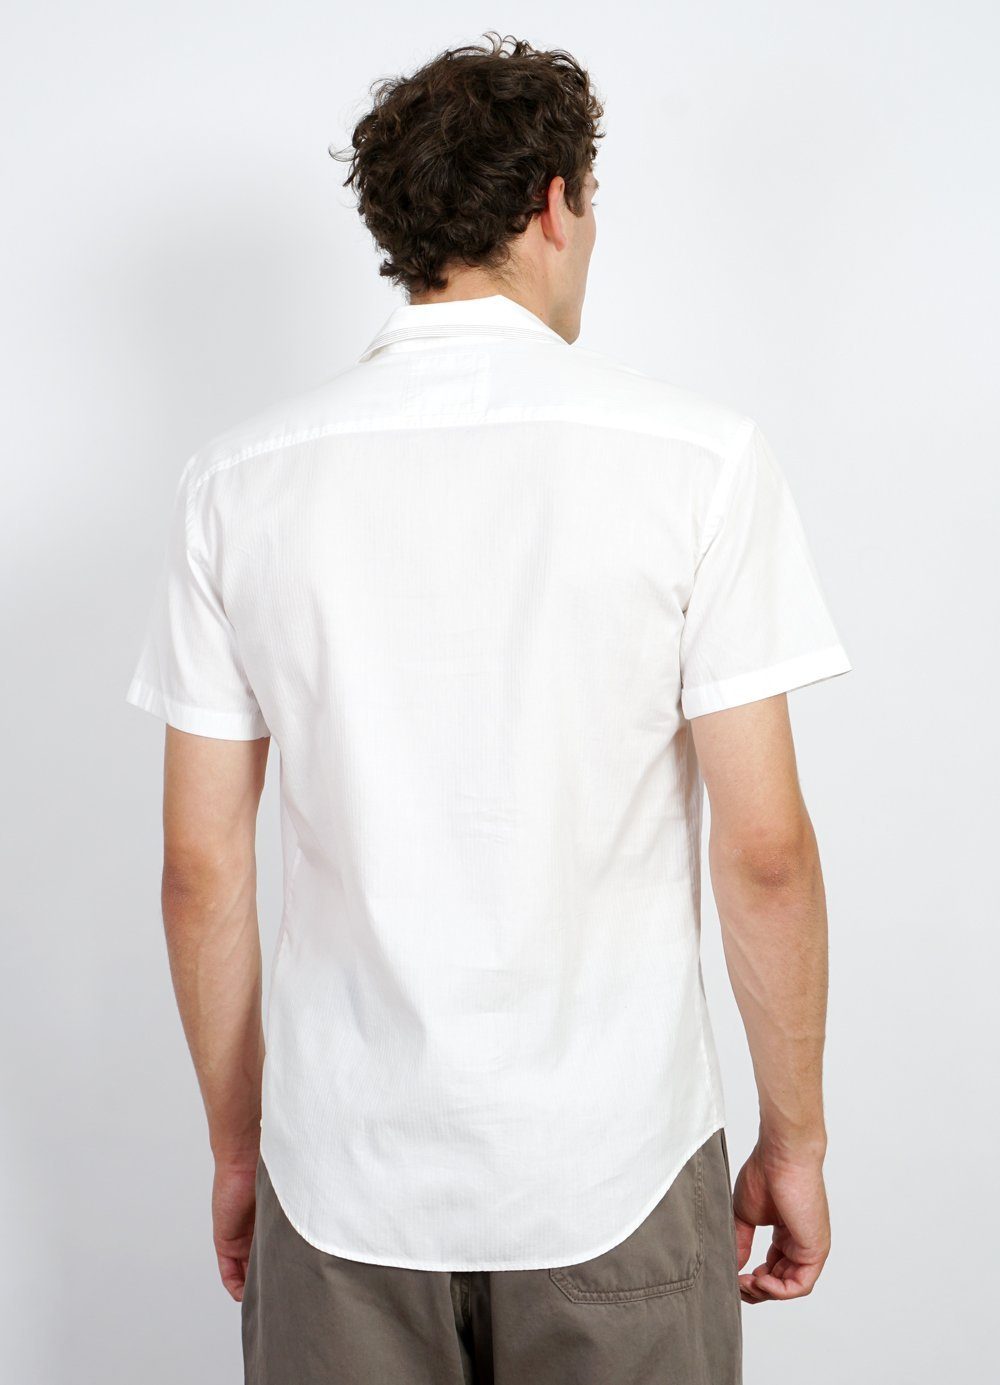 JONNY | Short Sleeve Shirt | White -HANSEN Garments- HANSEN Garments